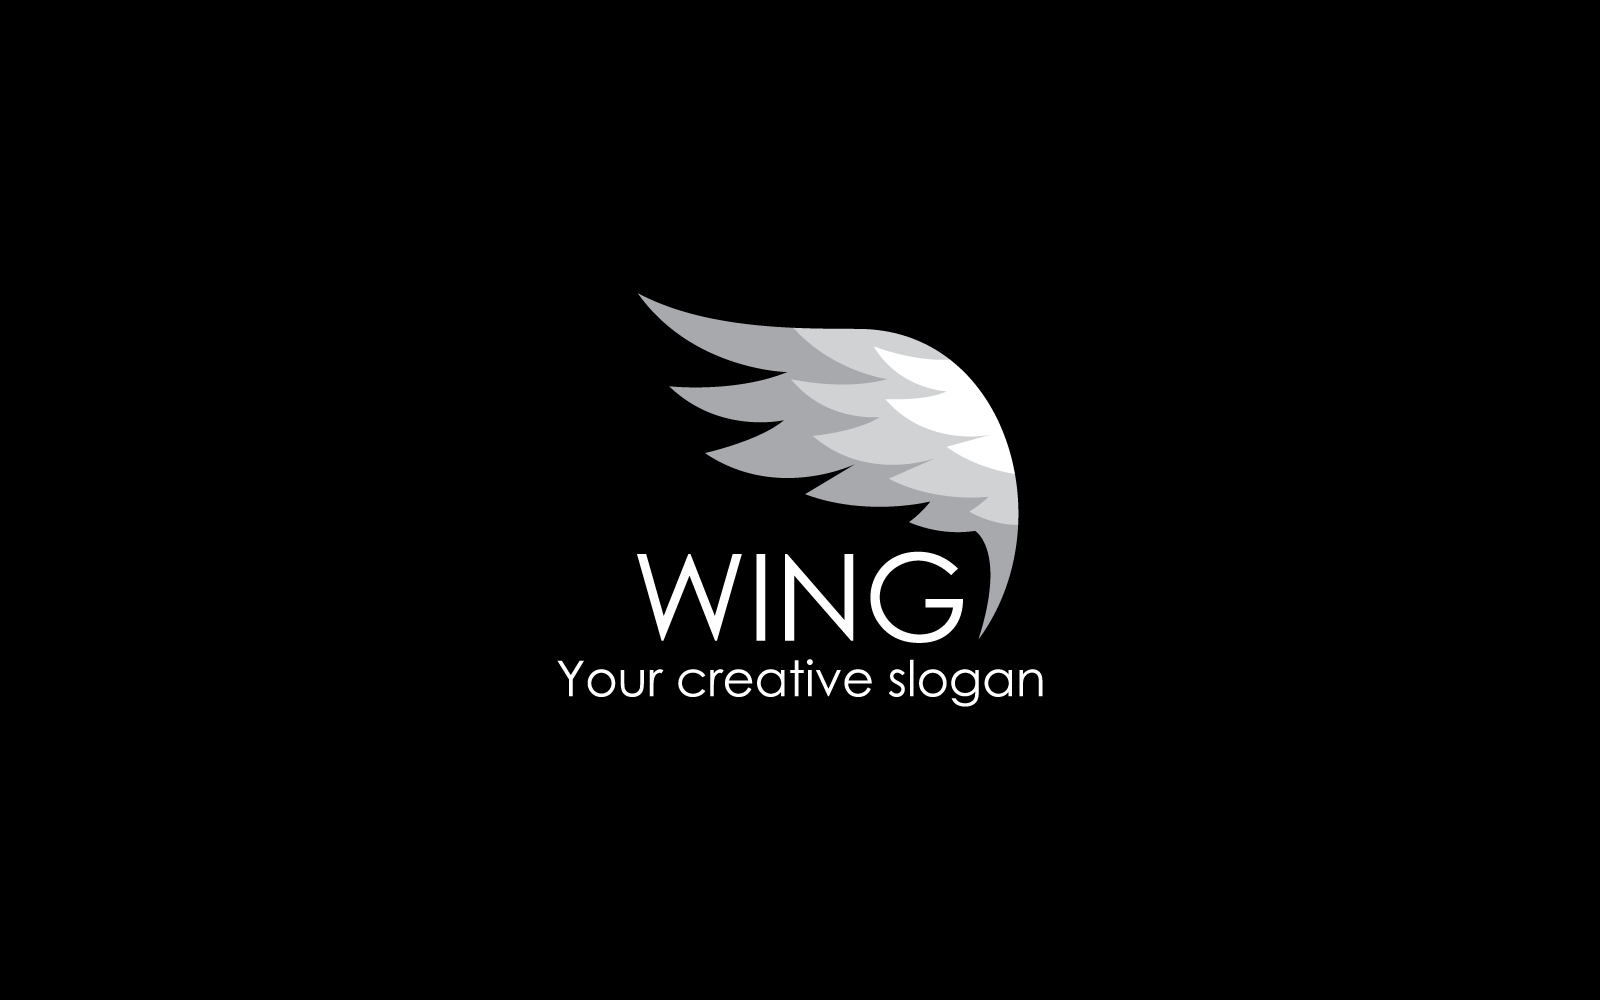 Wing bird illustration logo flat design template